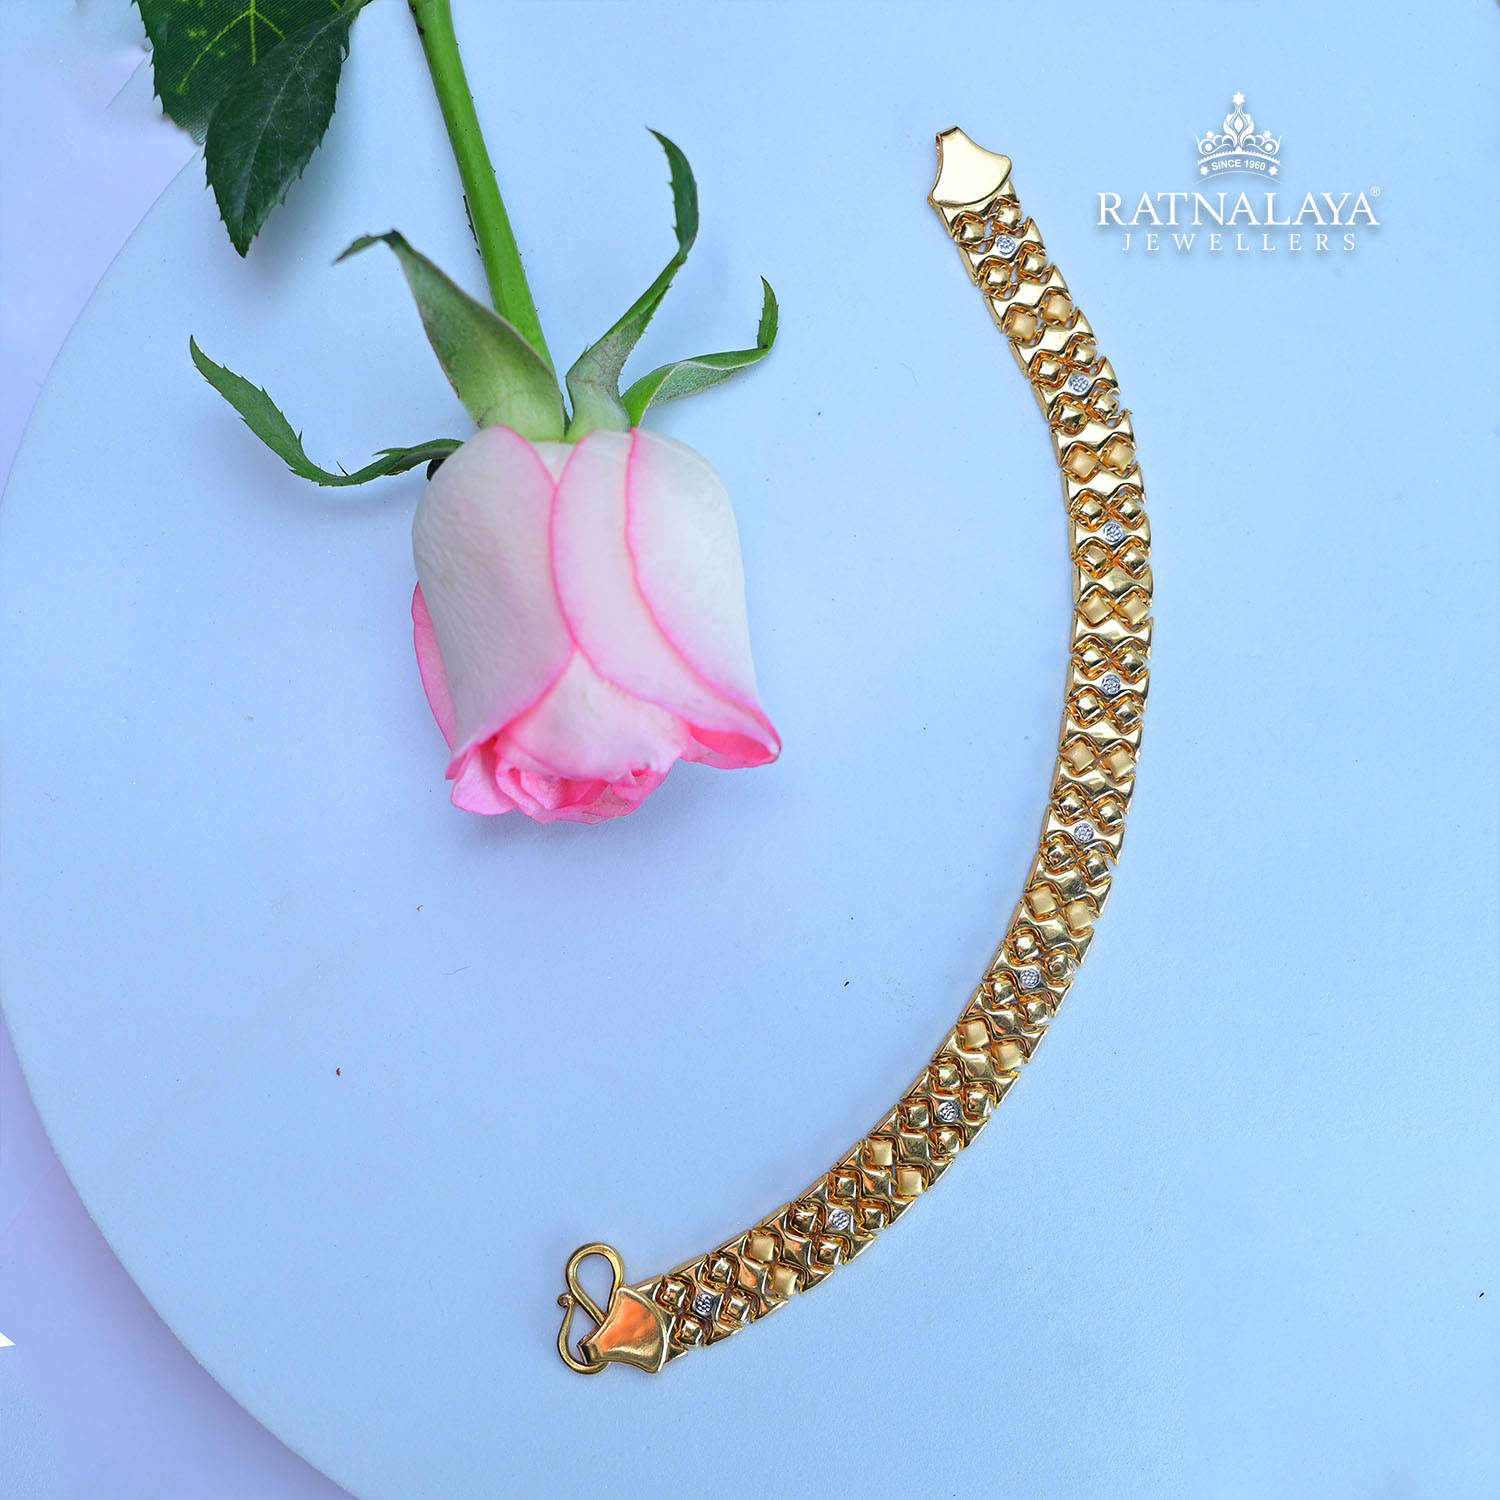 Buy Bhima Jewellers 22k Gold Bracelet for Women 6.1 gm at Amazon.in